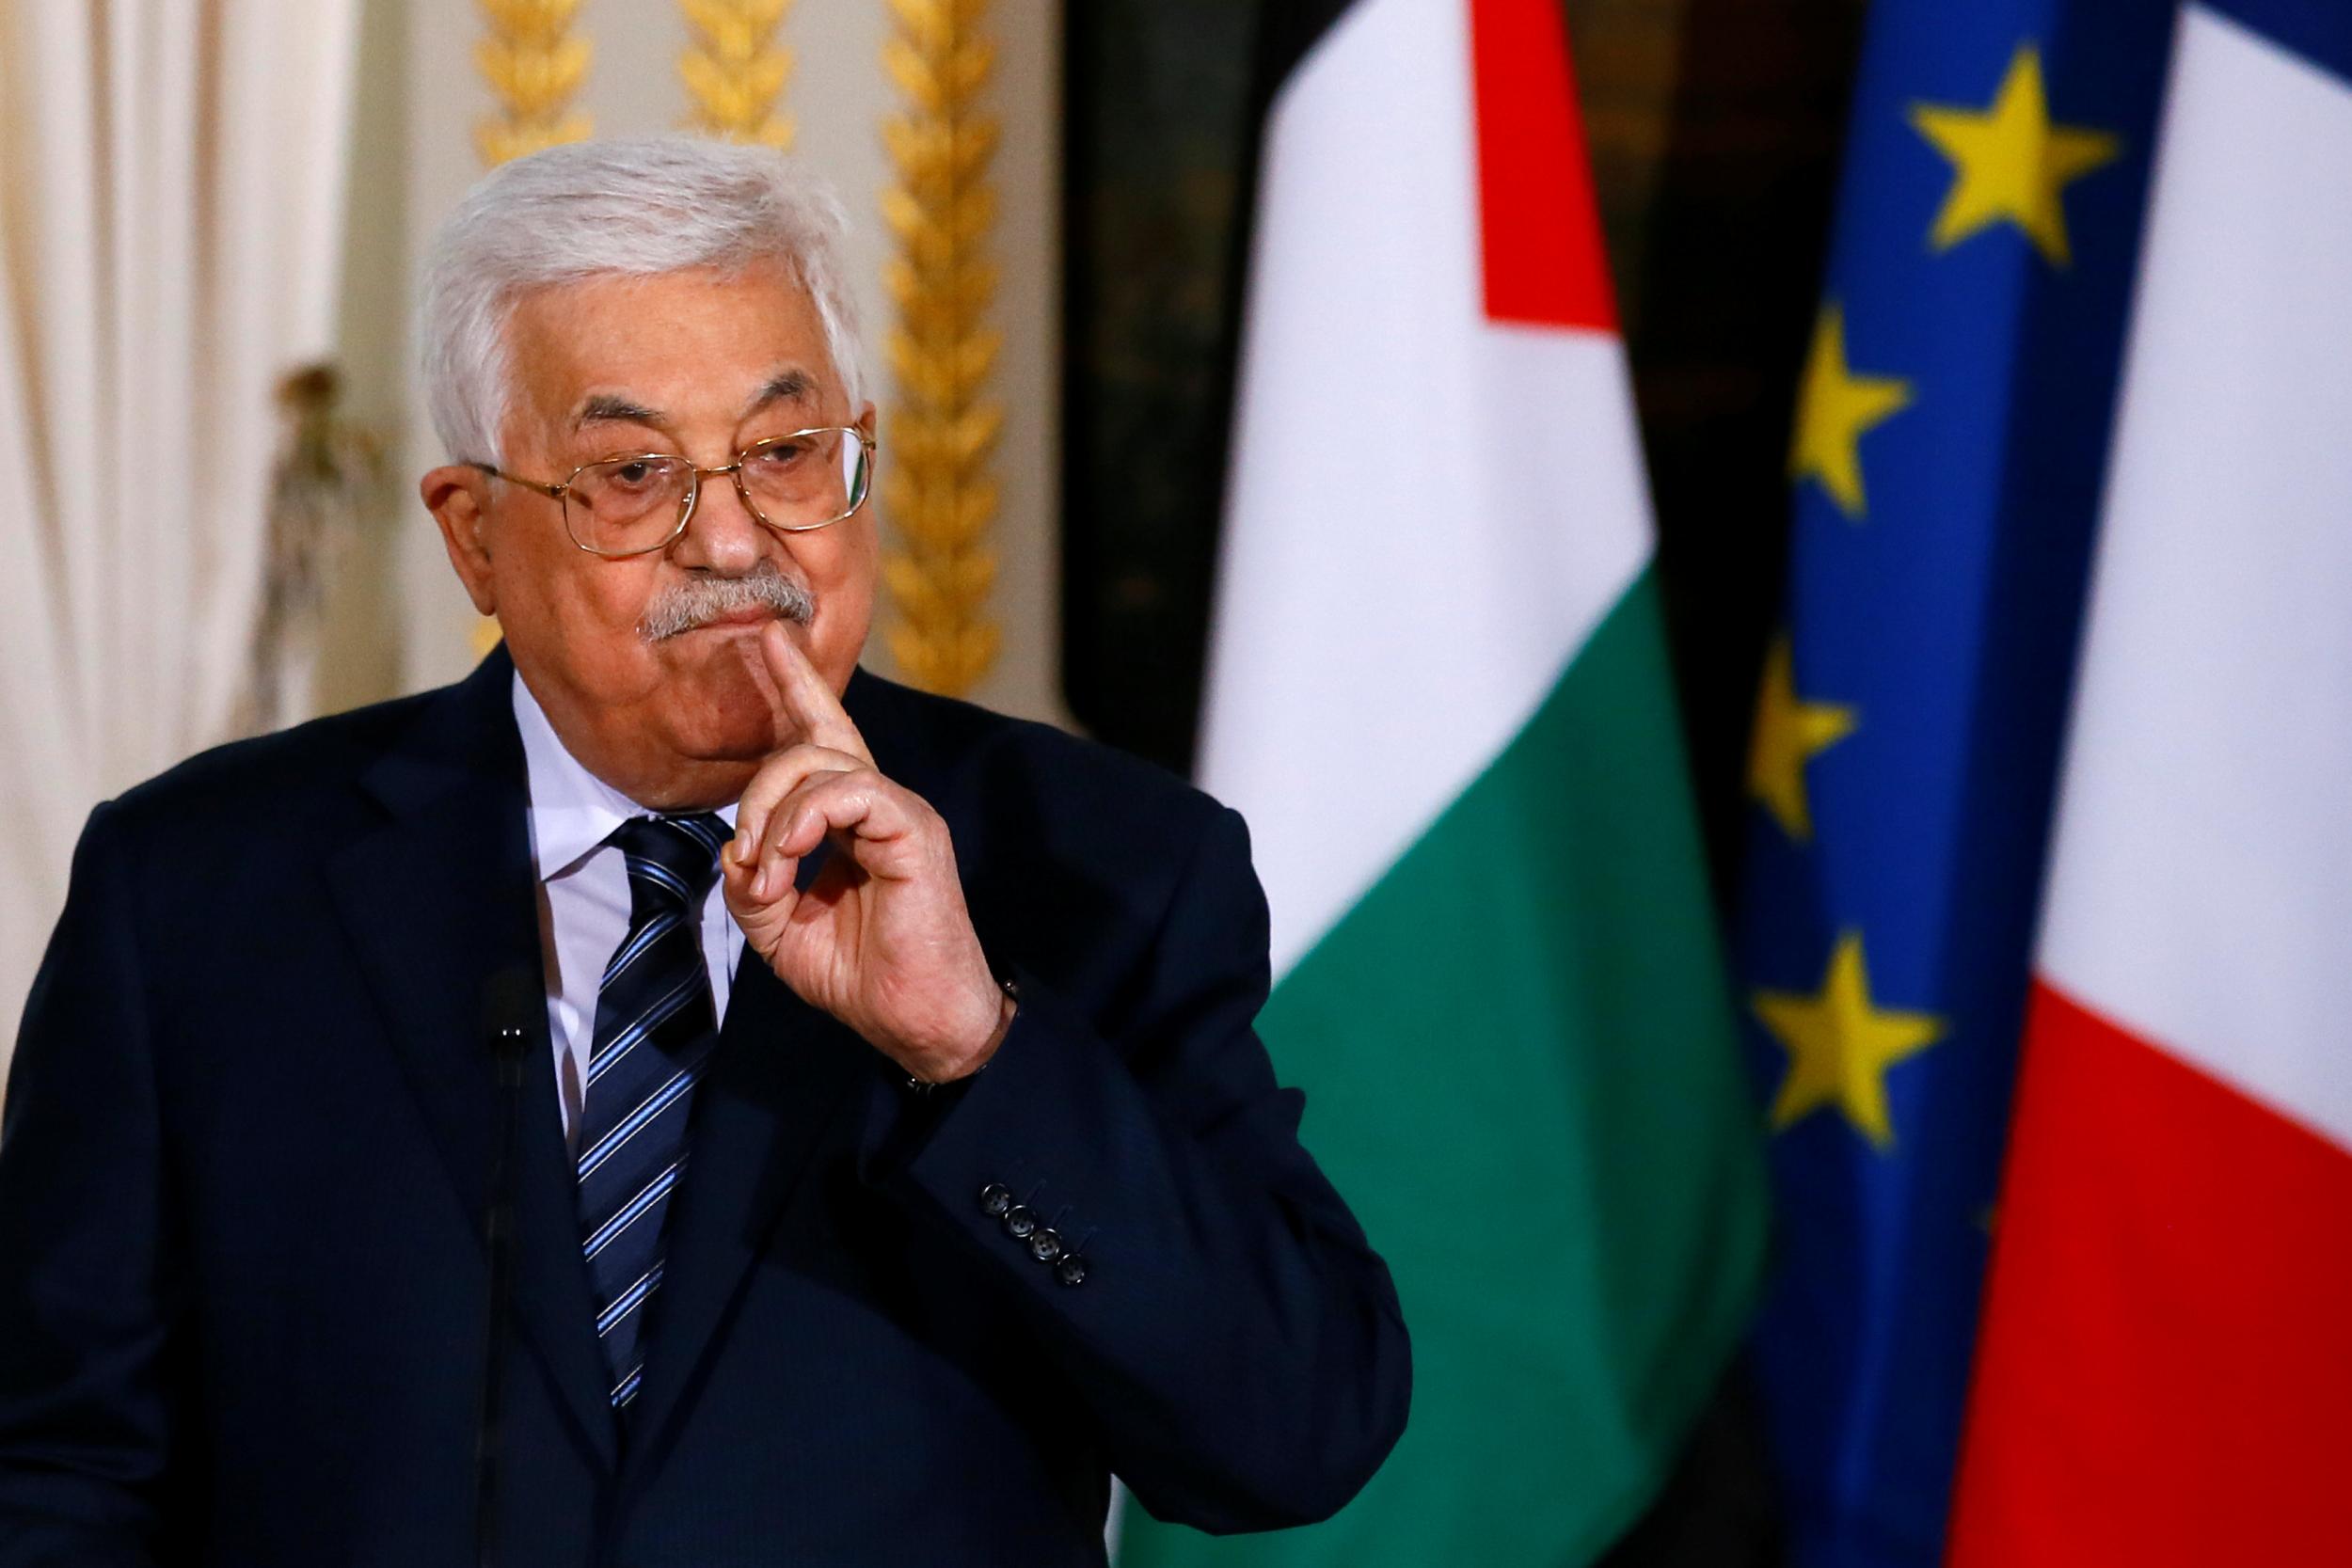 Palestinian President Mahmoud Abbas at a press conference at the Elysee Palace in Paris